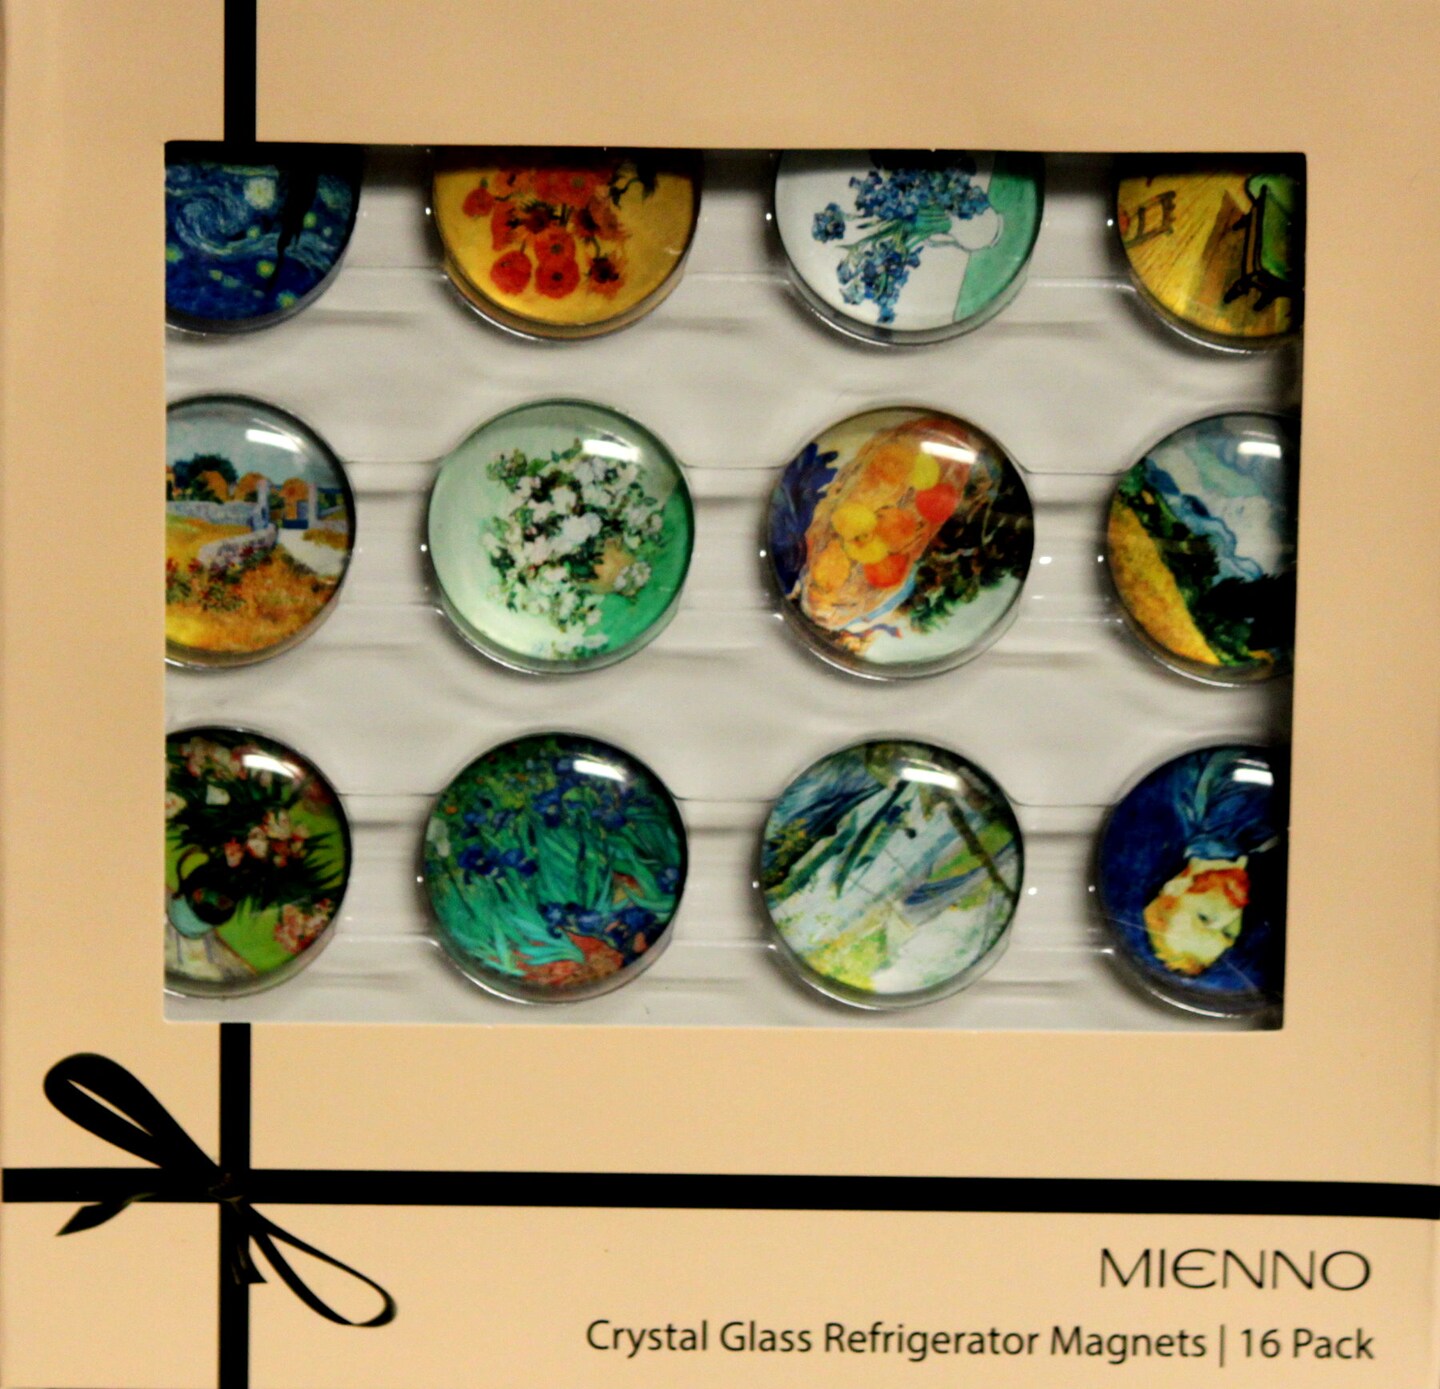 Mienno Crystal Glass Refrigerator Magnets 16 Pack Gift Set-Van Gogh